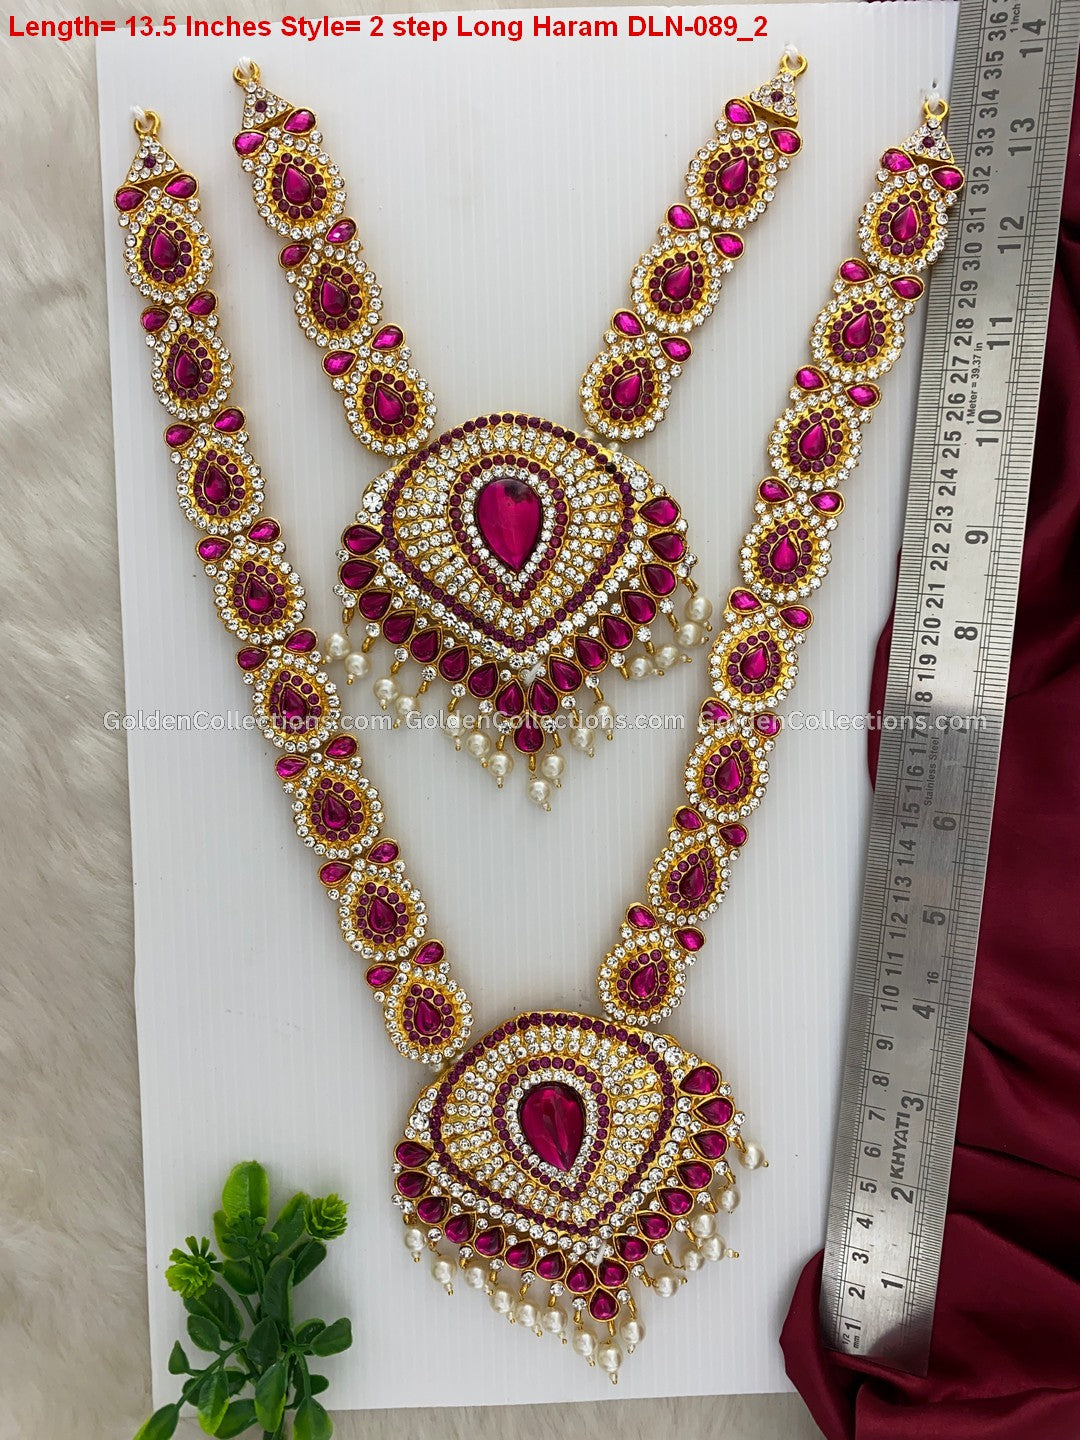 Divine Aura Long Haram - Hindu Deity Jewellery DLN-089 2